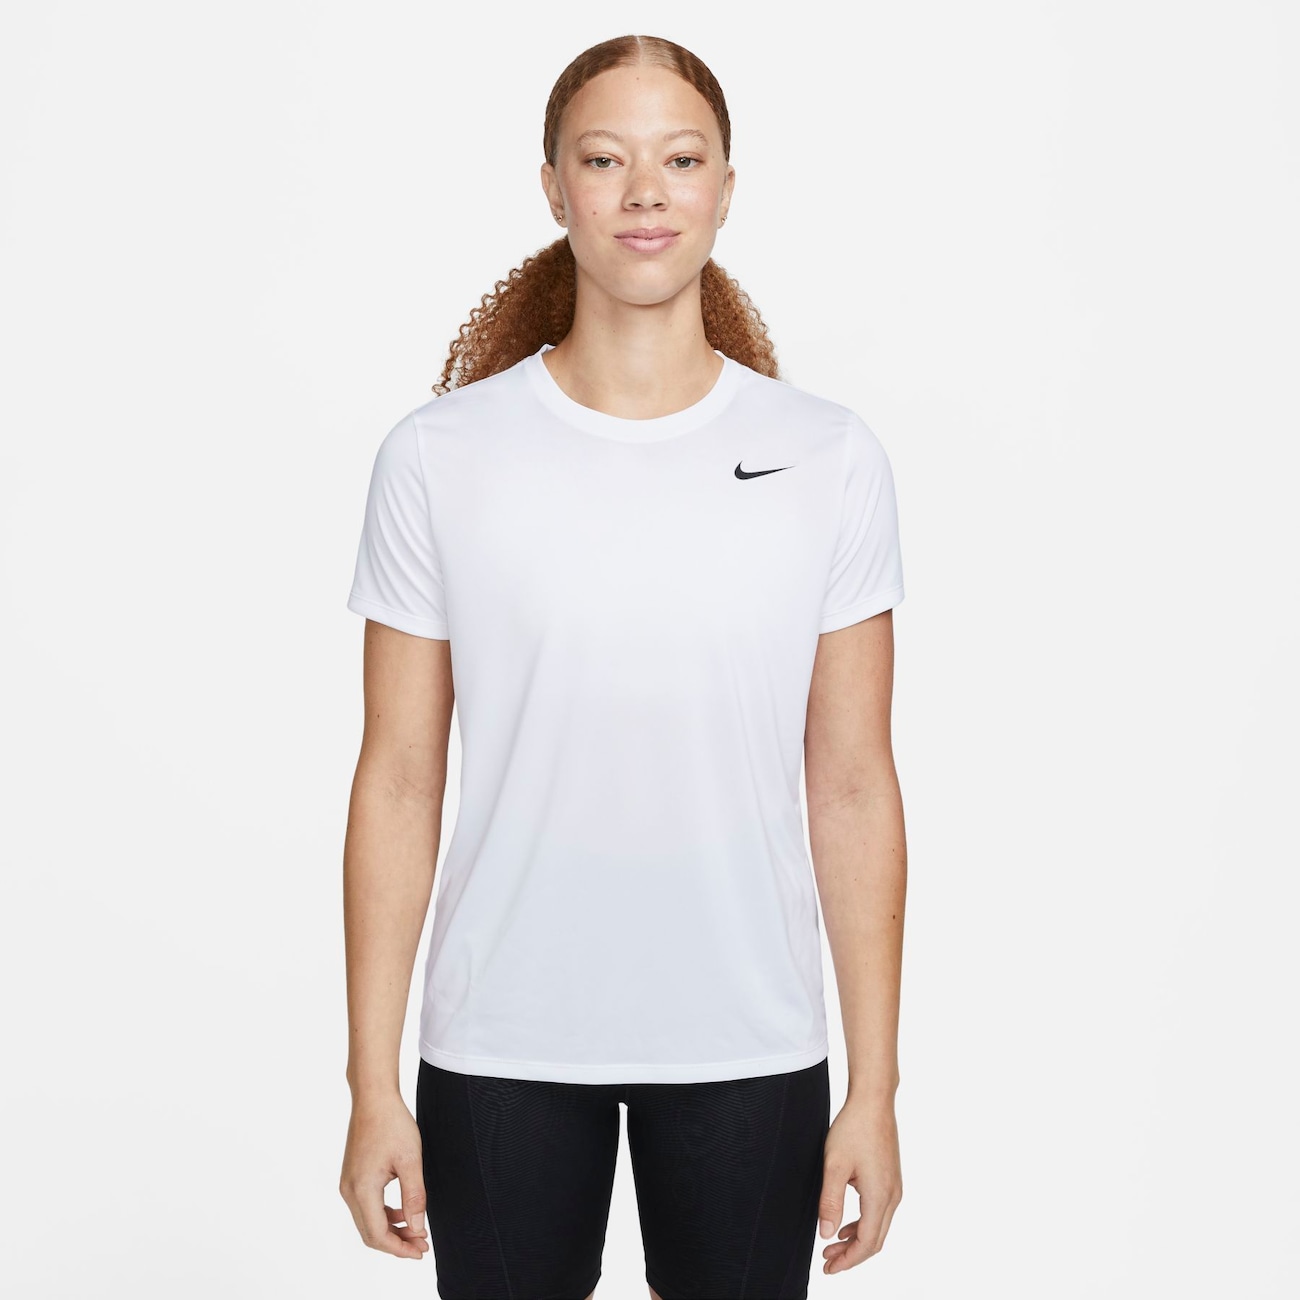 Camiseta Nike Yoga Dri-Fit Feminina - Tam: P - Shopping Azul